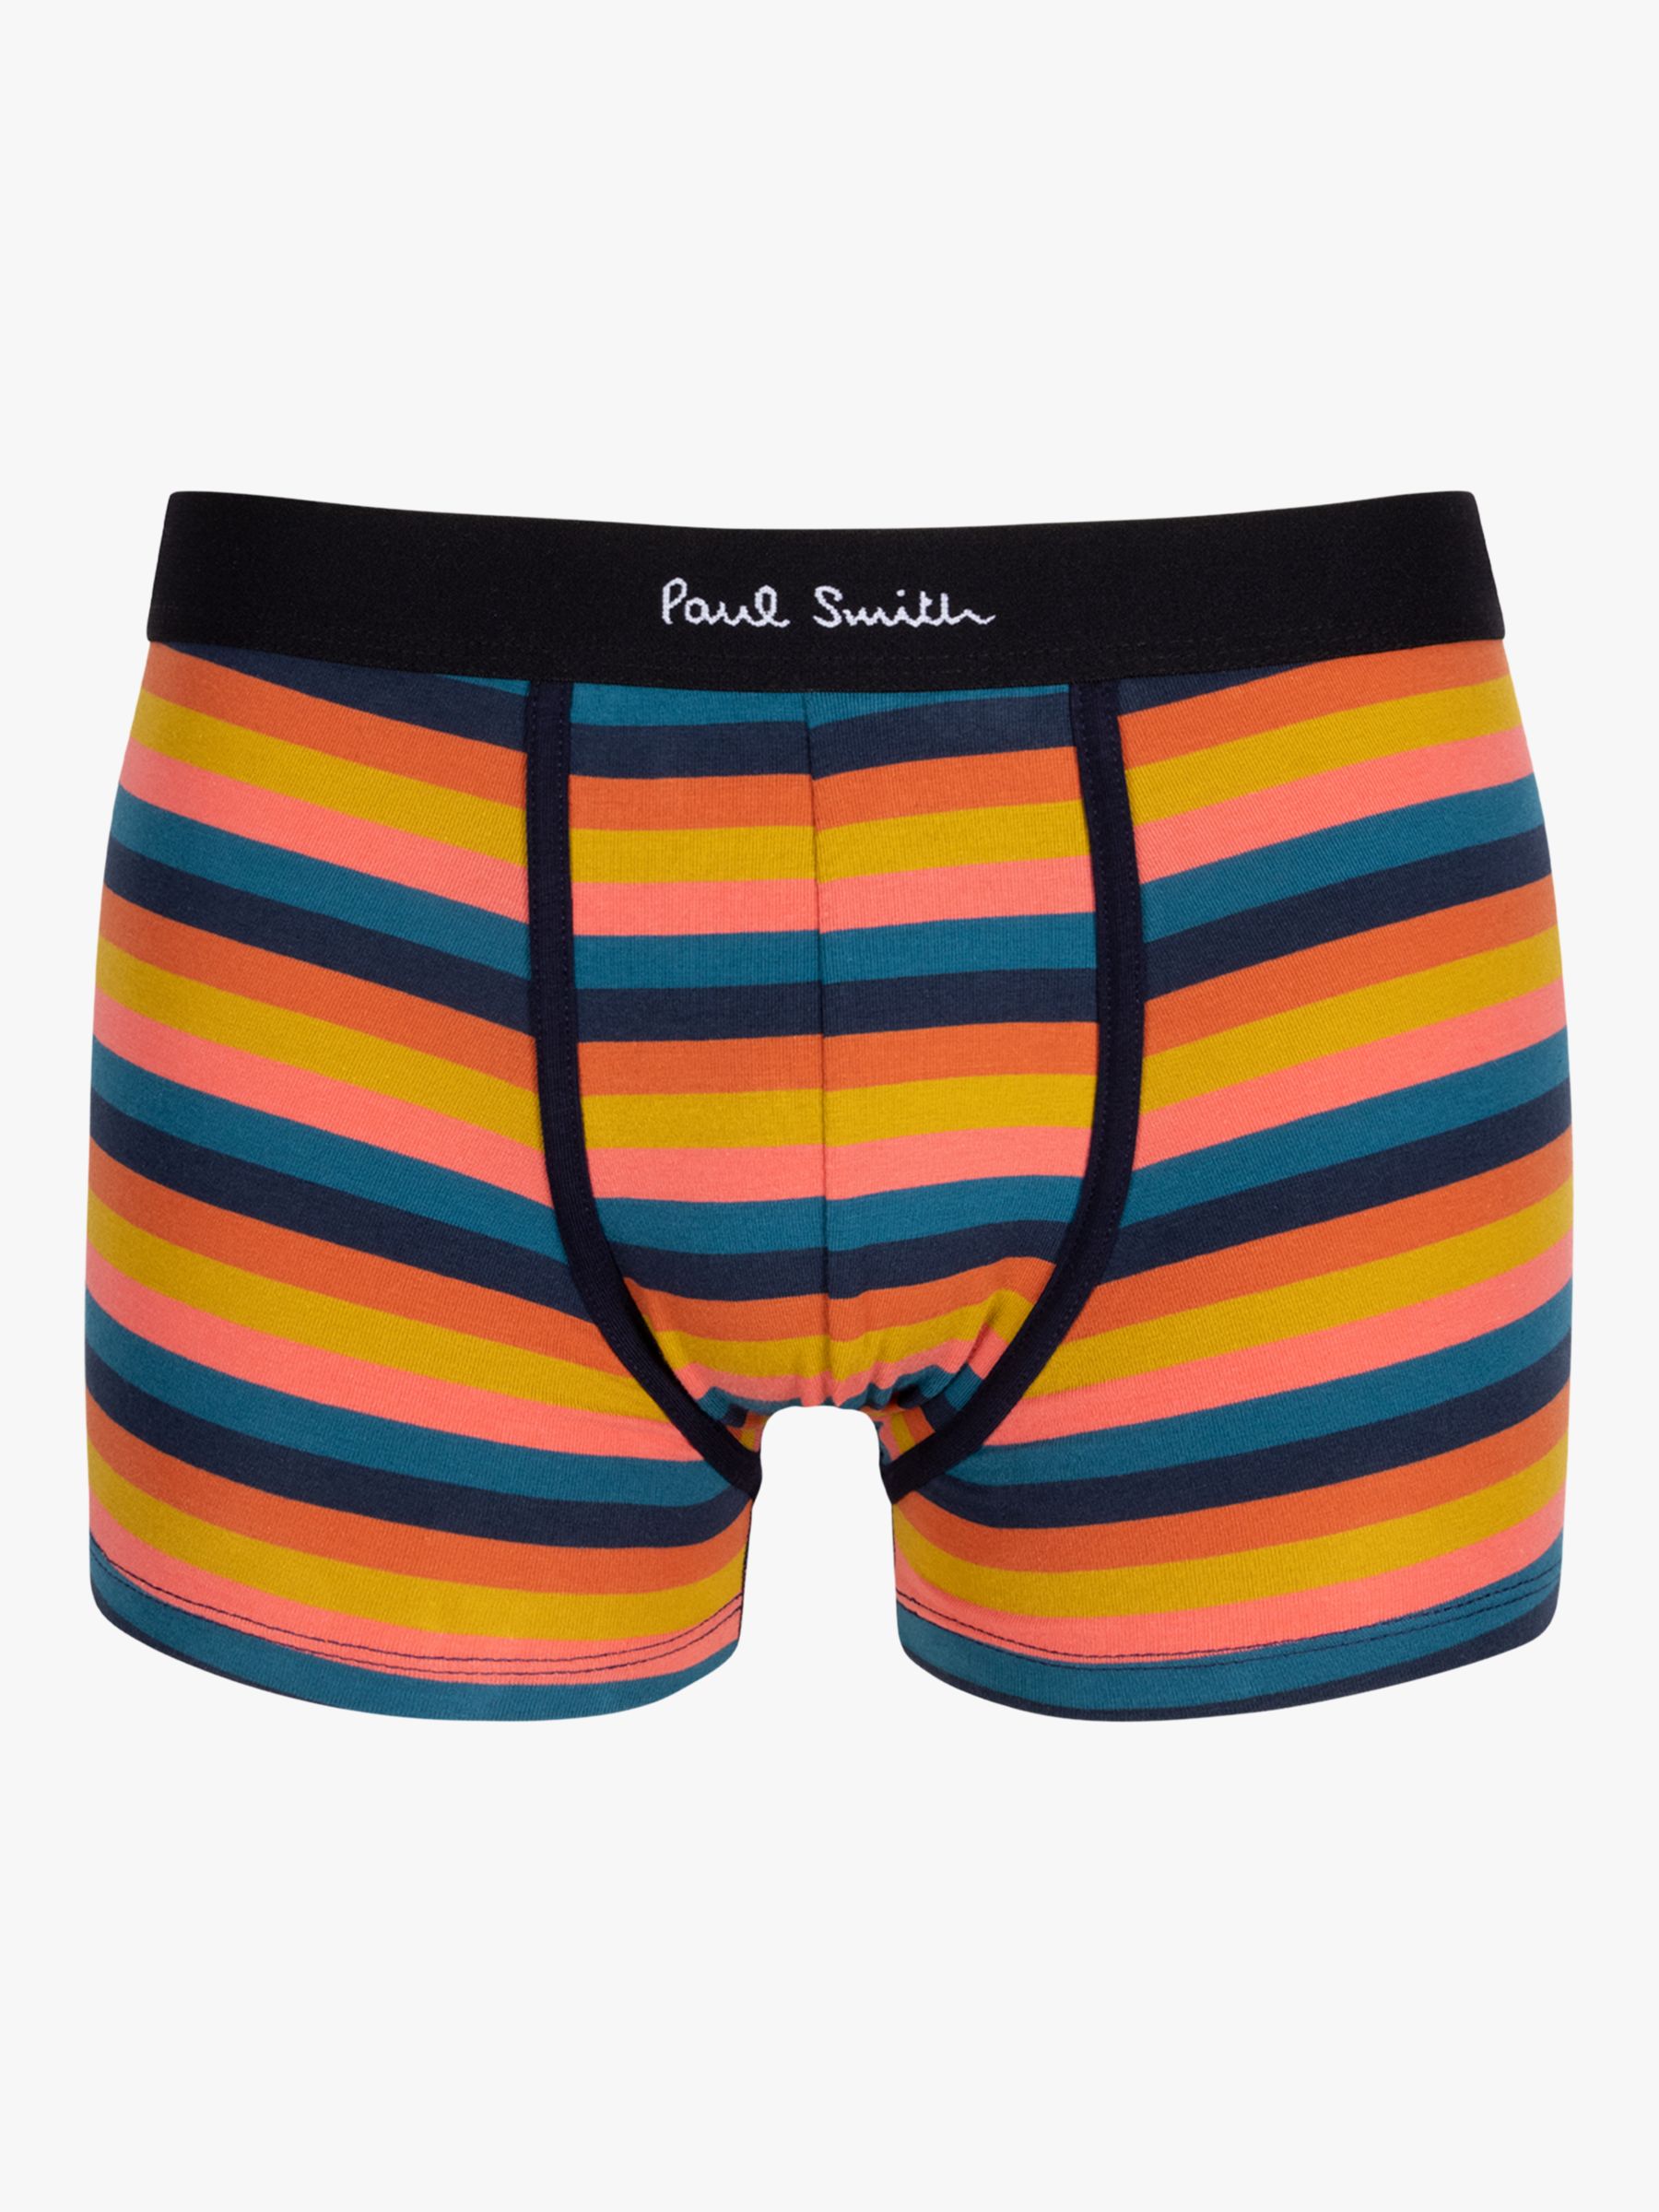 Paul Smith Organic Cotton Stripe, Spot & Plain Trunks, Pack of 3, Multi ...